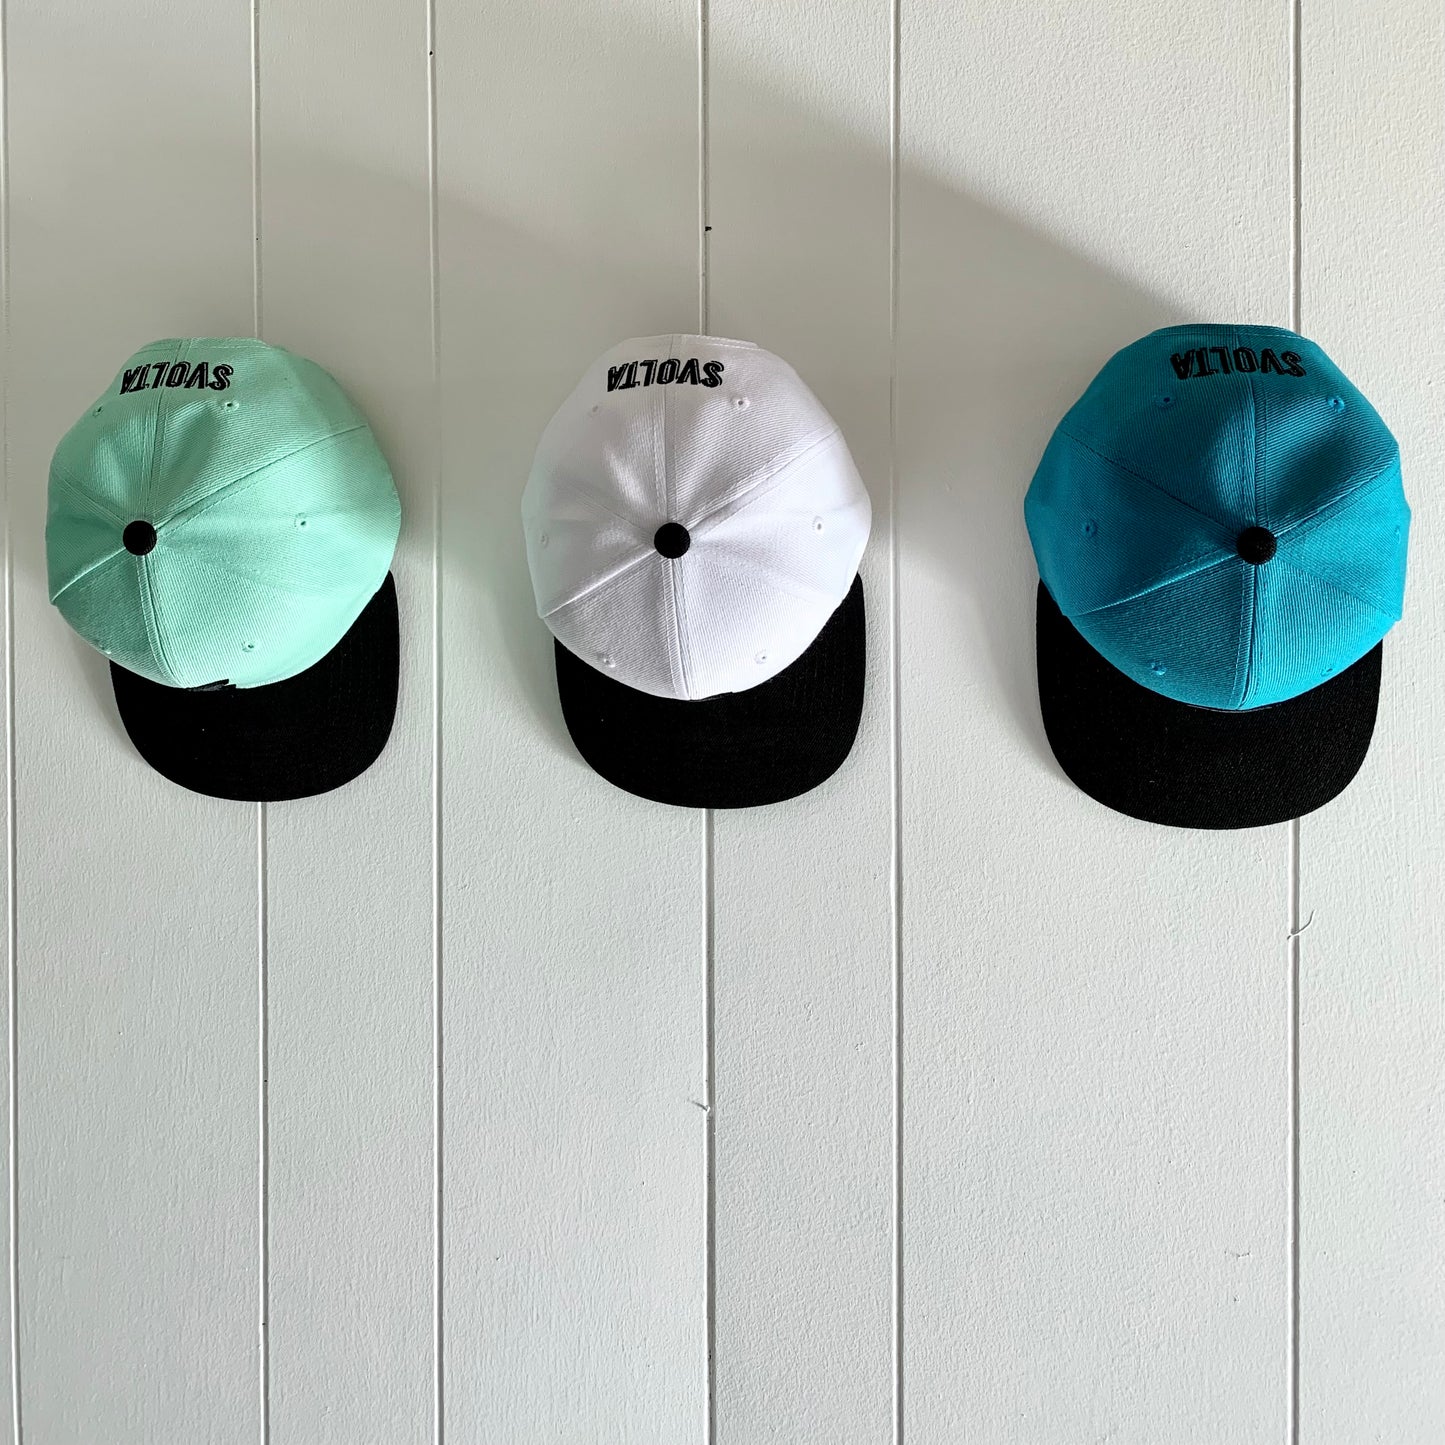 Svolta Youth Child Kids Boys Girls snapback hats 3D embroidered ightning bolt mint black white teal